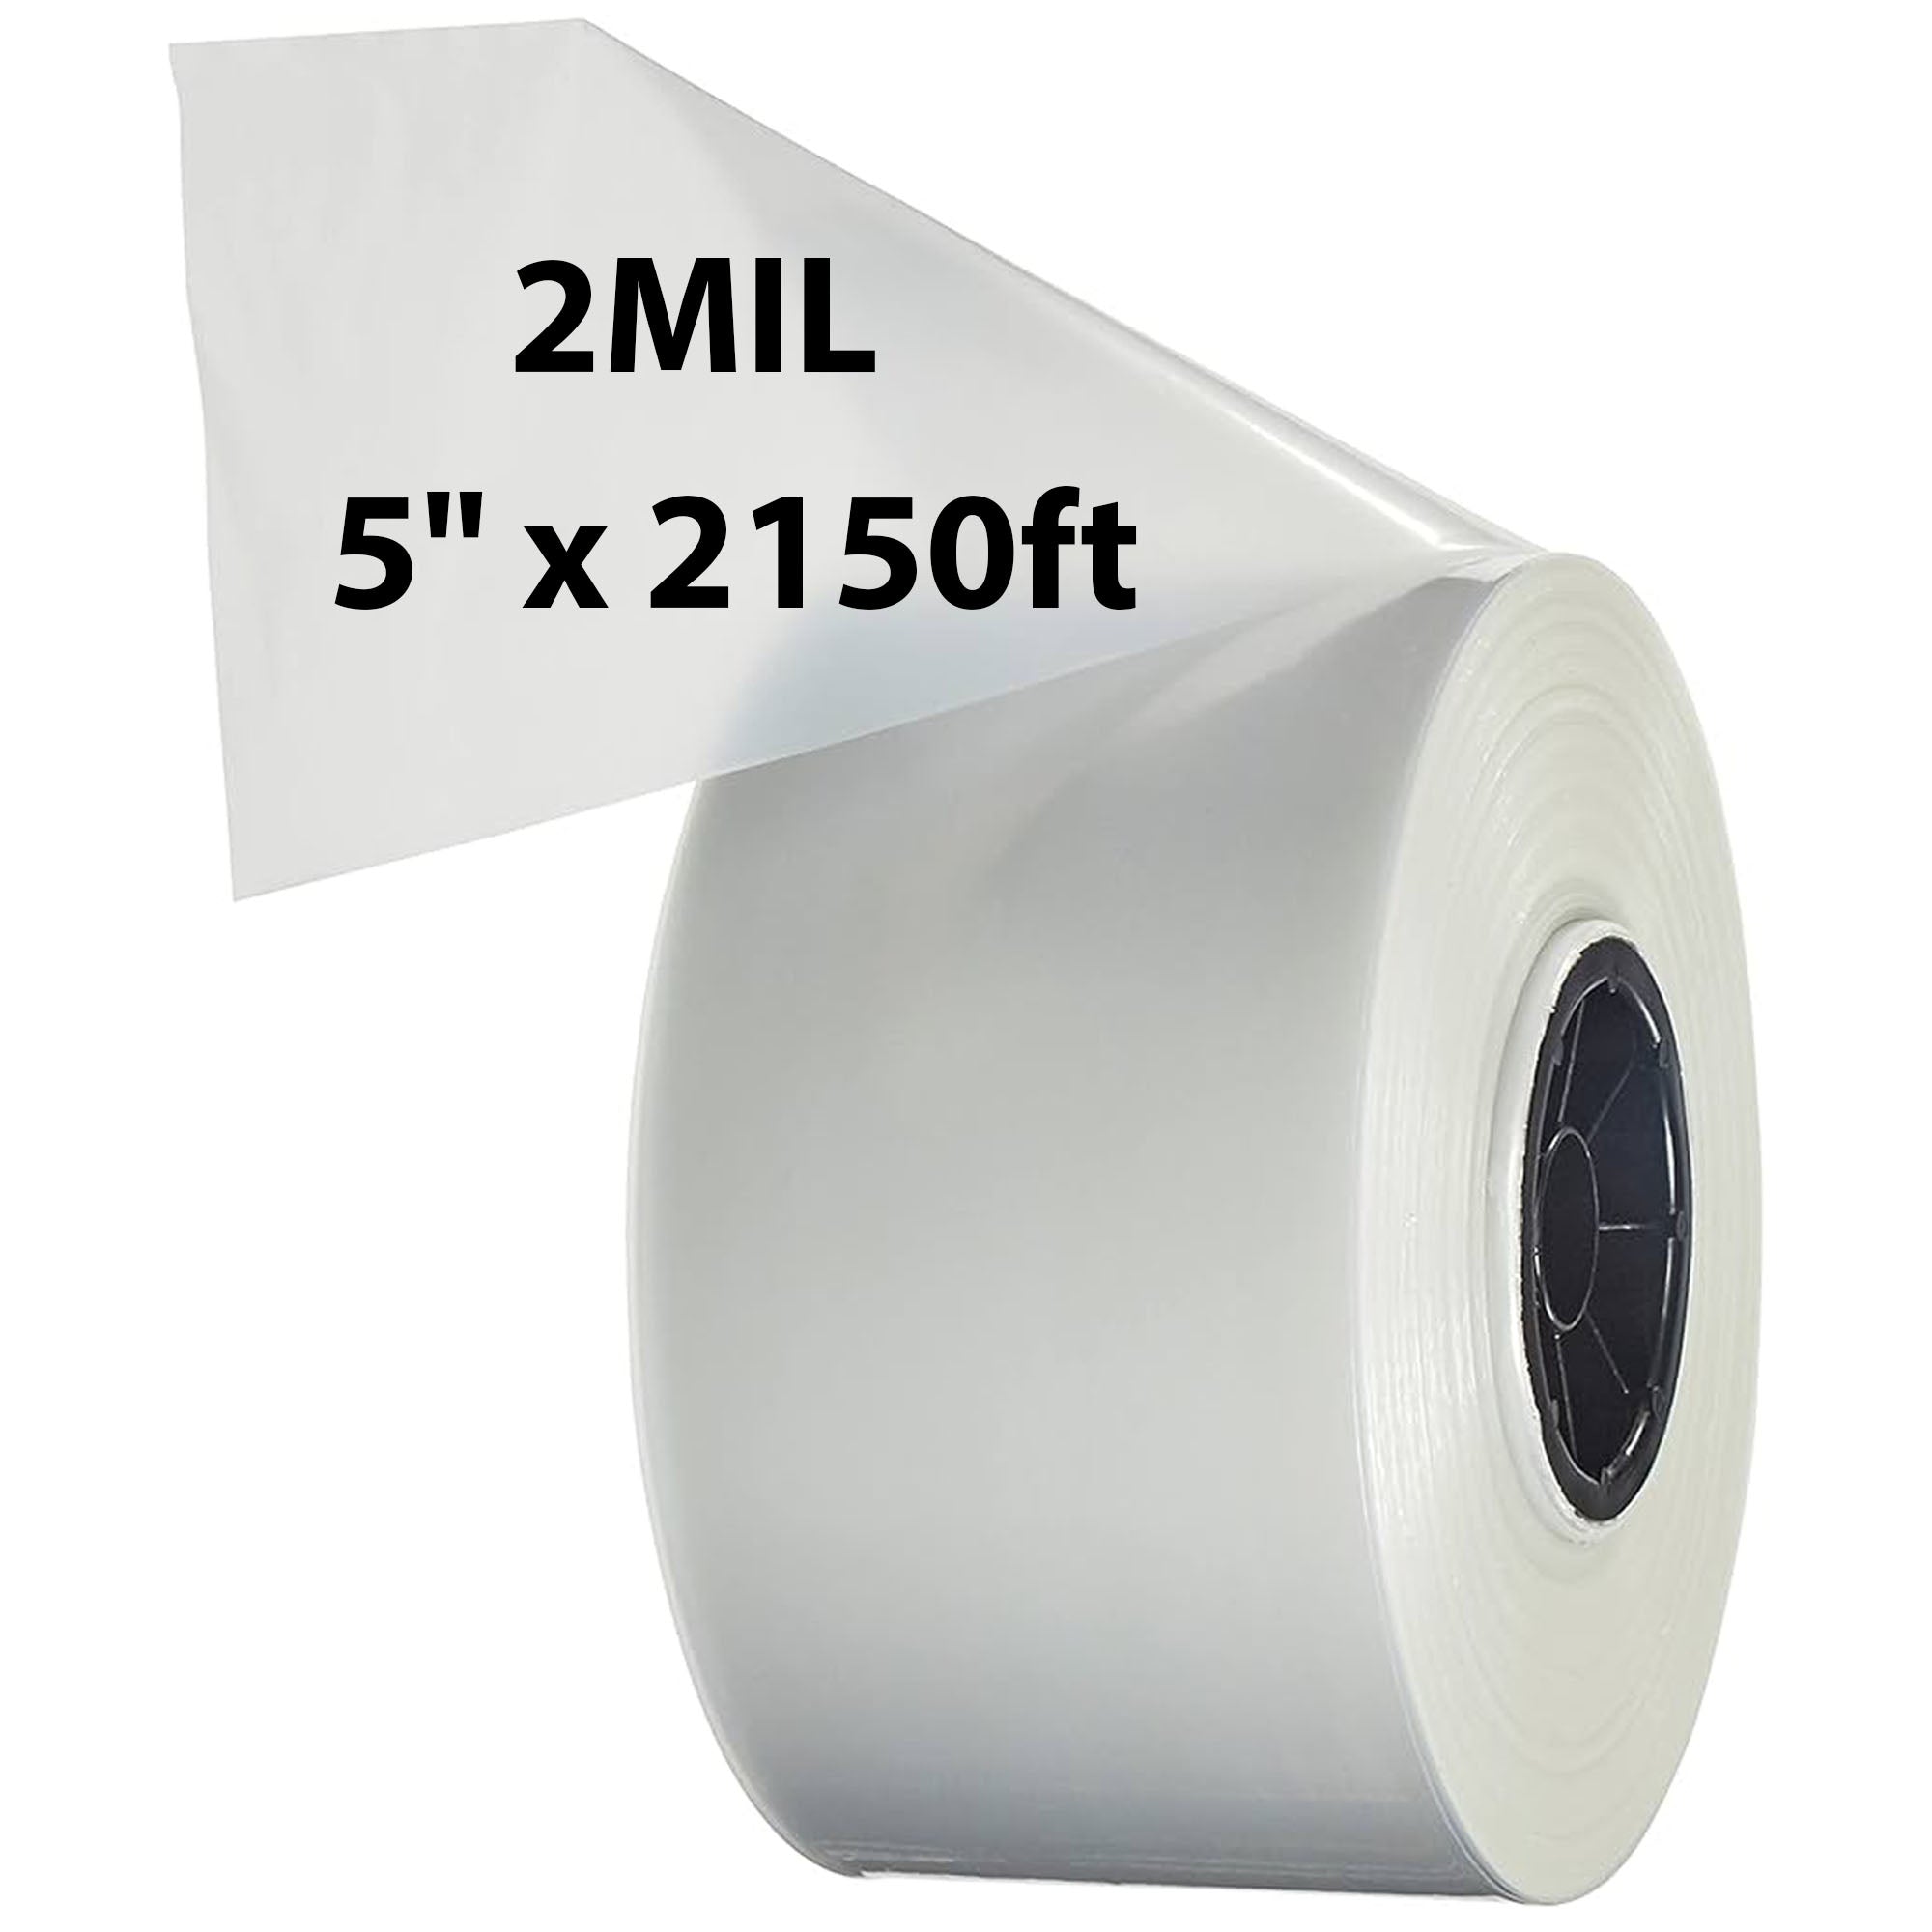 Food Grade Poly Tubing Roll Bags 2Mil 5x2150ft- Impulse Heat Sealer